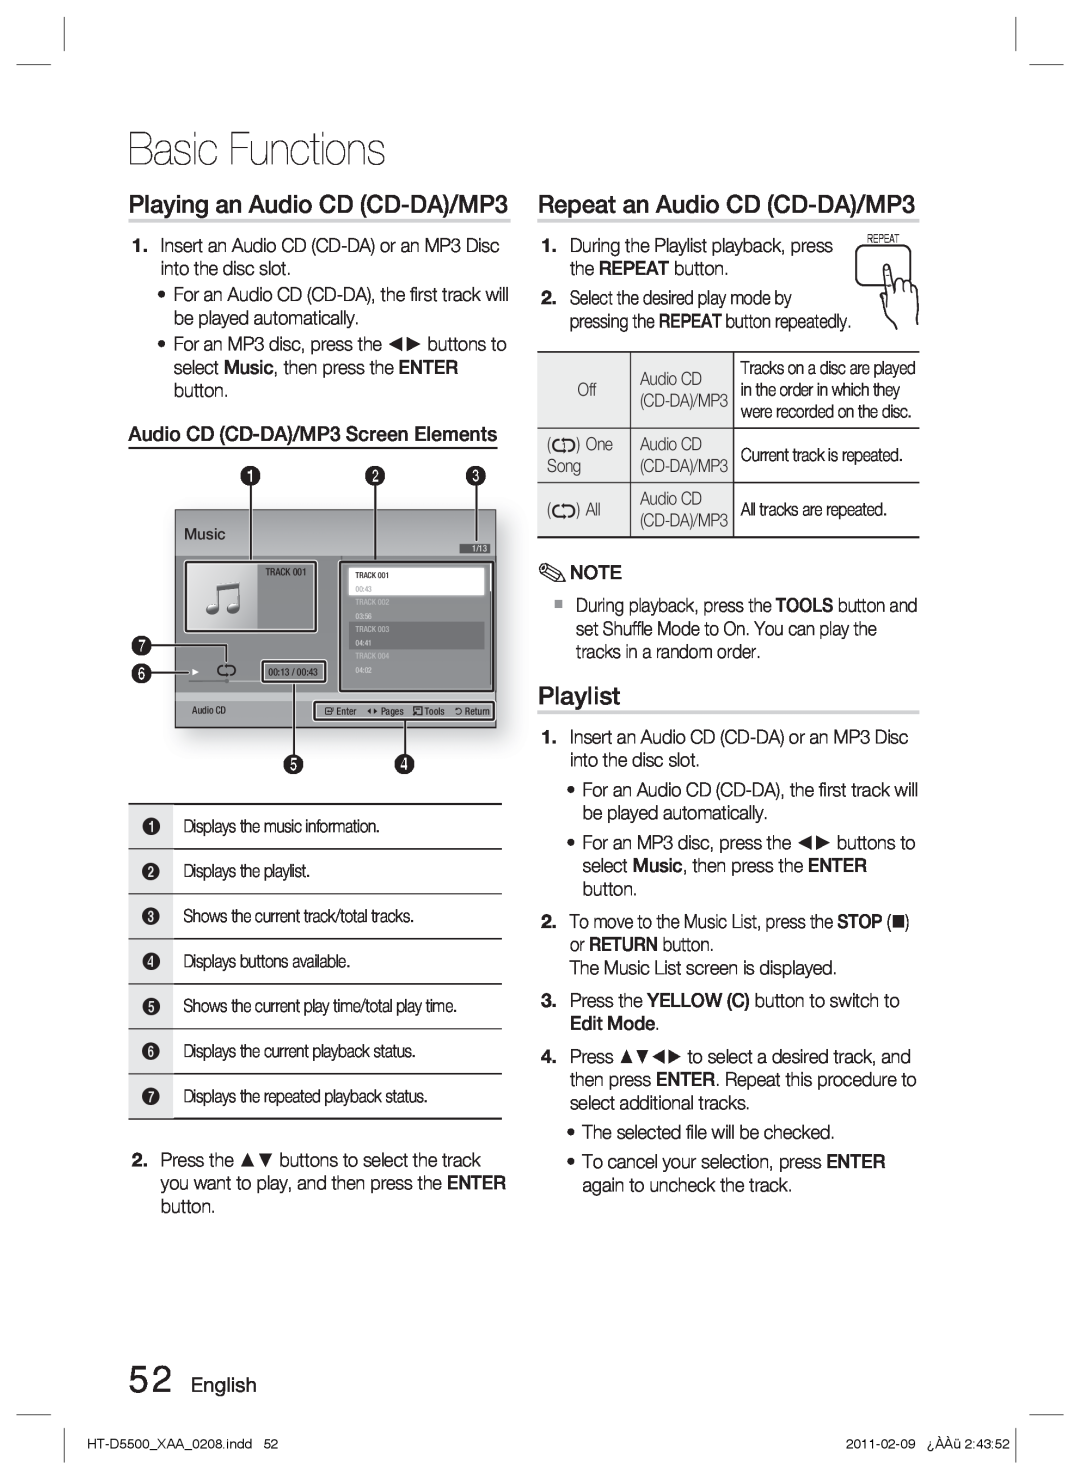 Samsung D5500 user manual Playing an Audio CD CD-DA/MP3, Repeat an Audio CD CD-DA/MP3, Playlist, 7 6 +, Basic Functions 